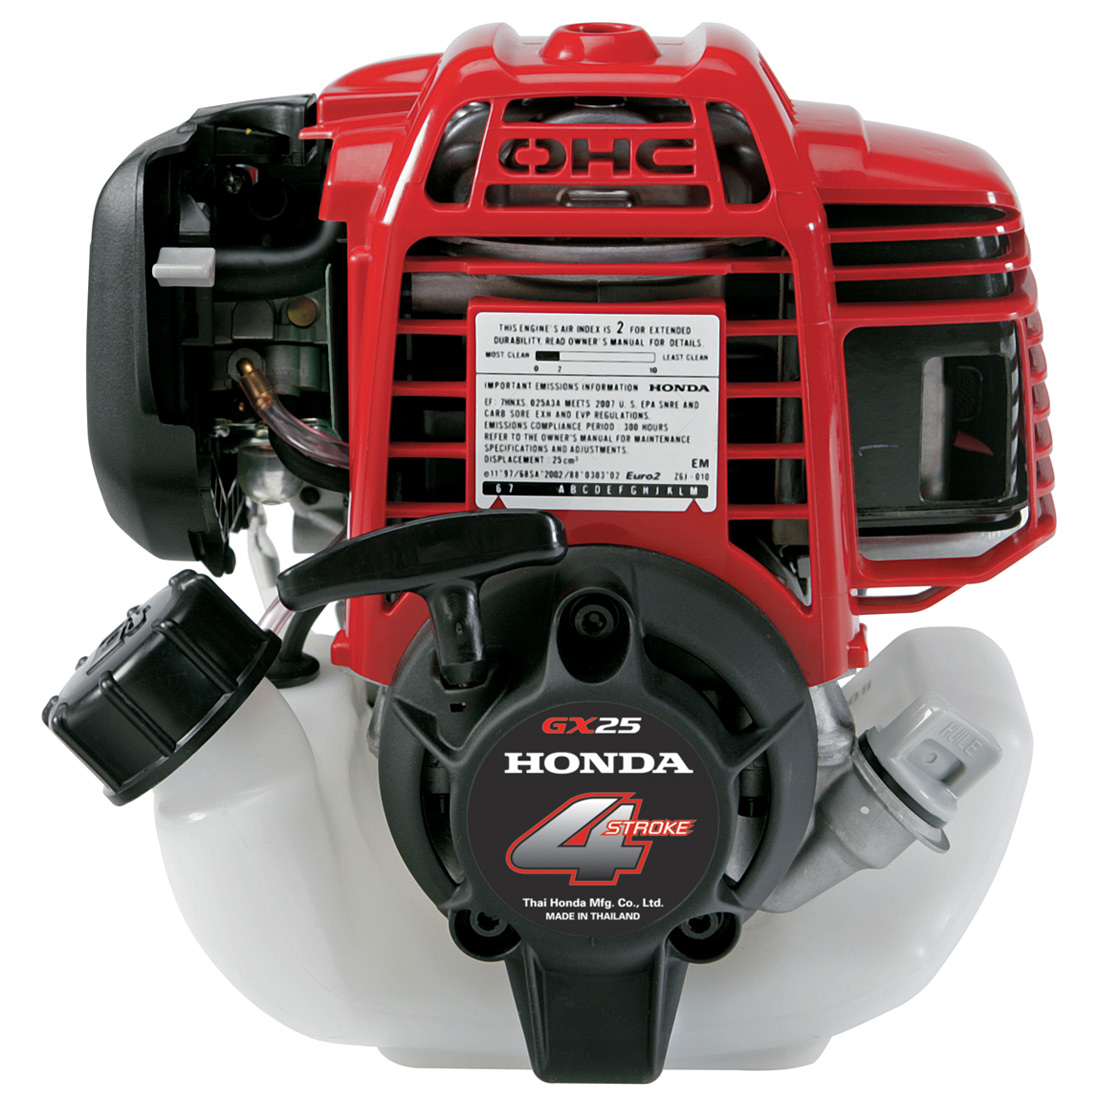 Honda 25. Триммер Хонда gx25. Мотор Honda gx25. Двигатель Honda gx25. Двигатель бензиновый (1 л.с.) Honda gx25nt-STSC.